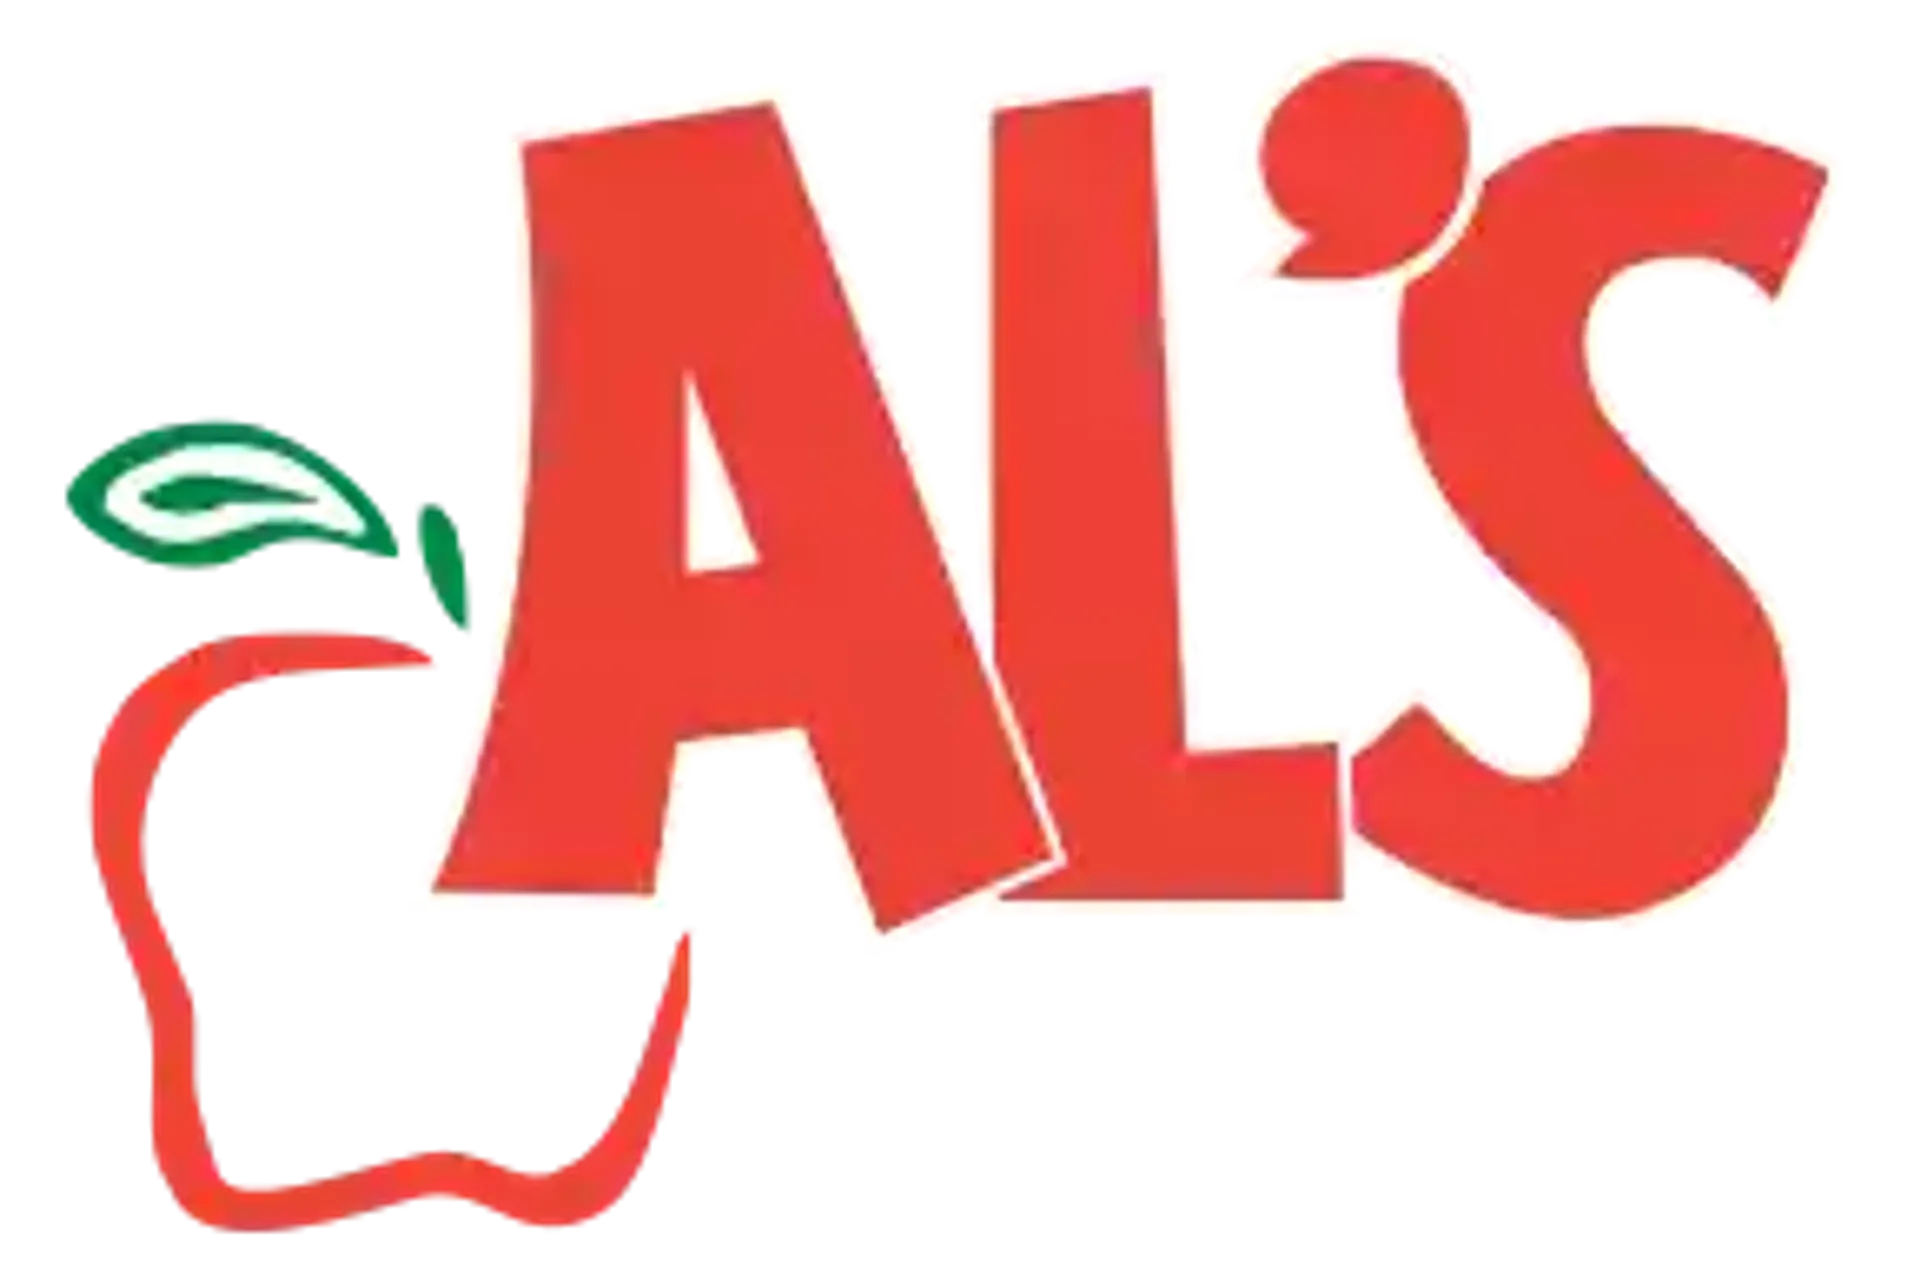 AL'S SUPERMARKET logo. Current weekly ad